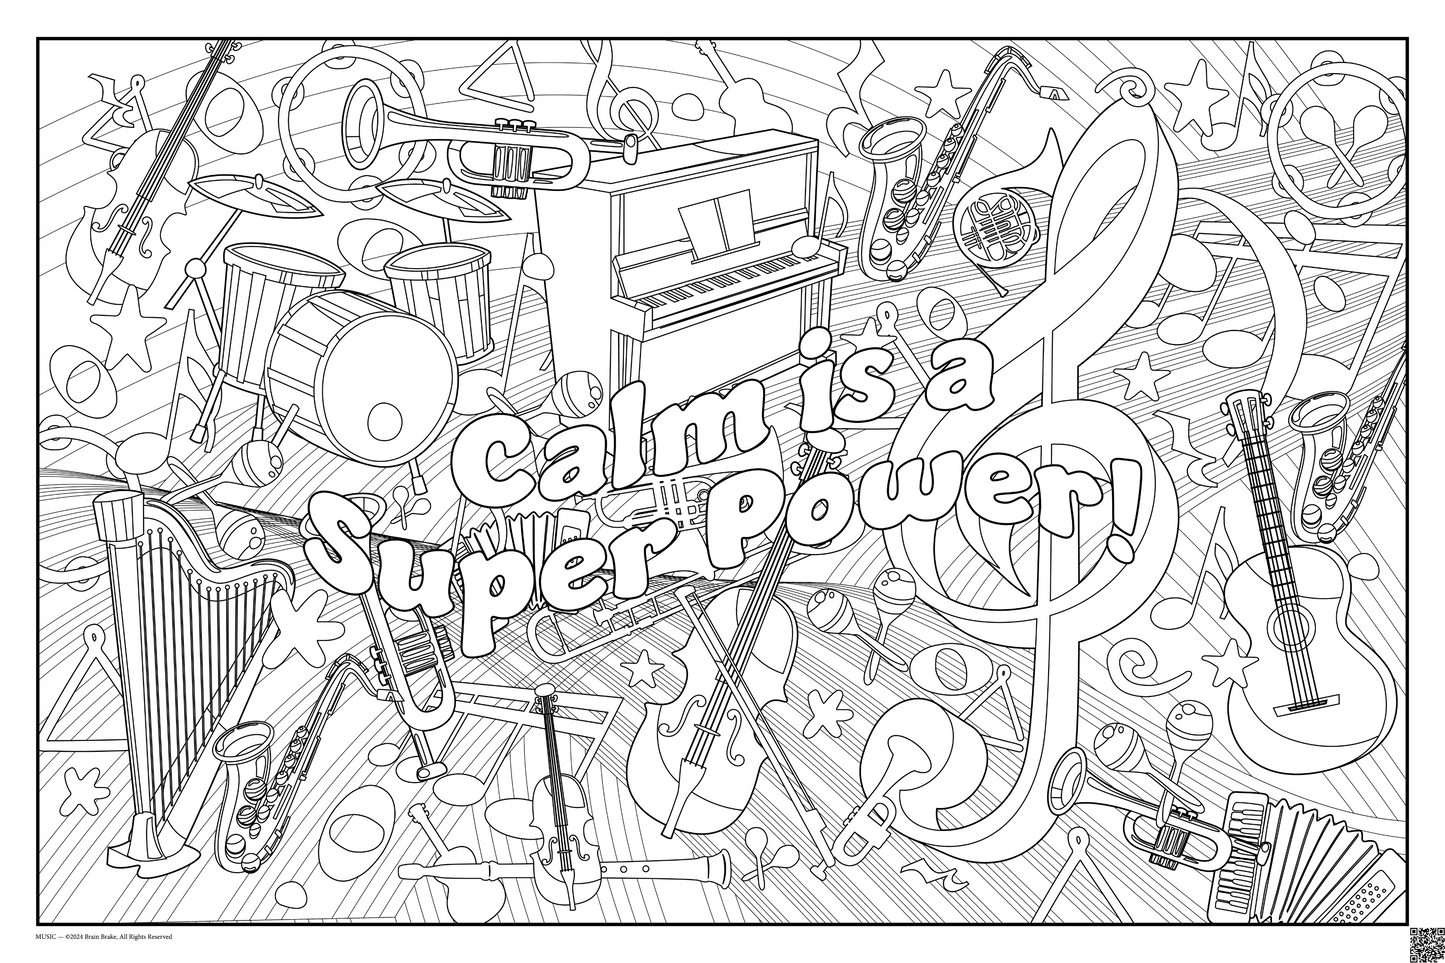 Calming Corner: Calm is a Super Power